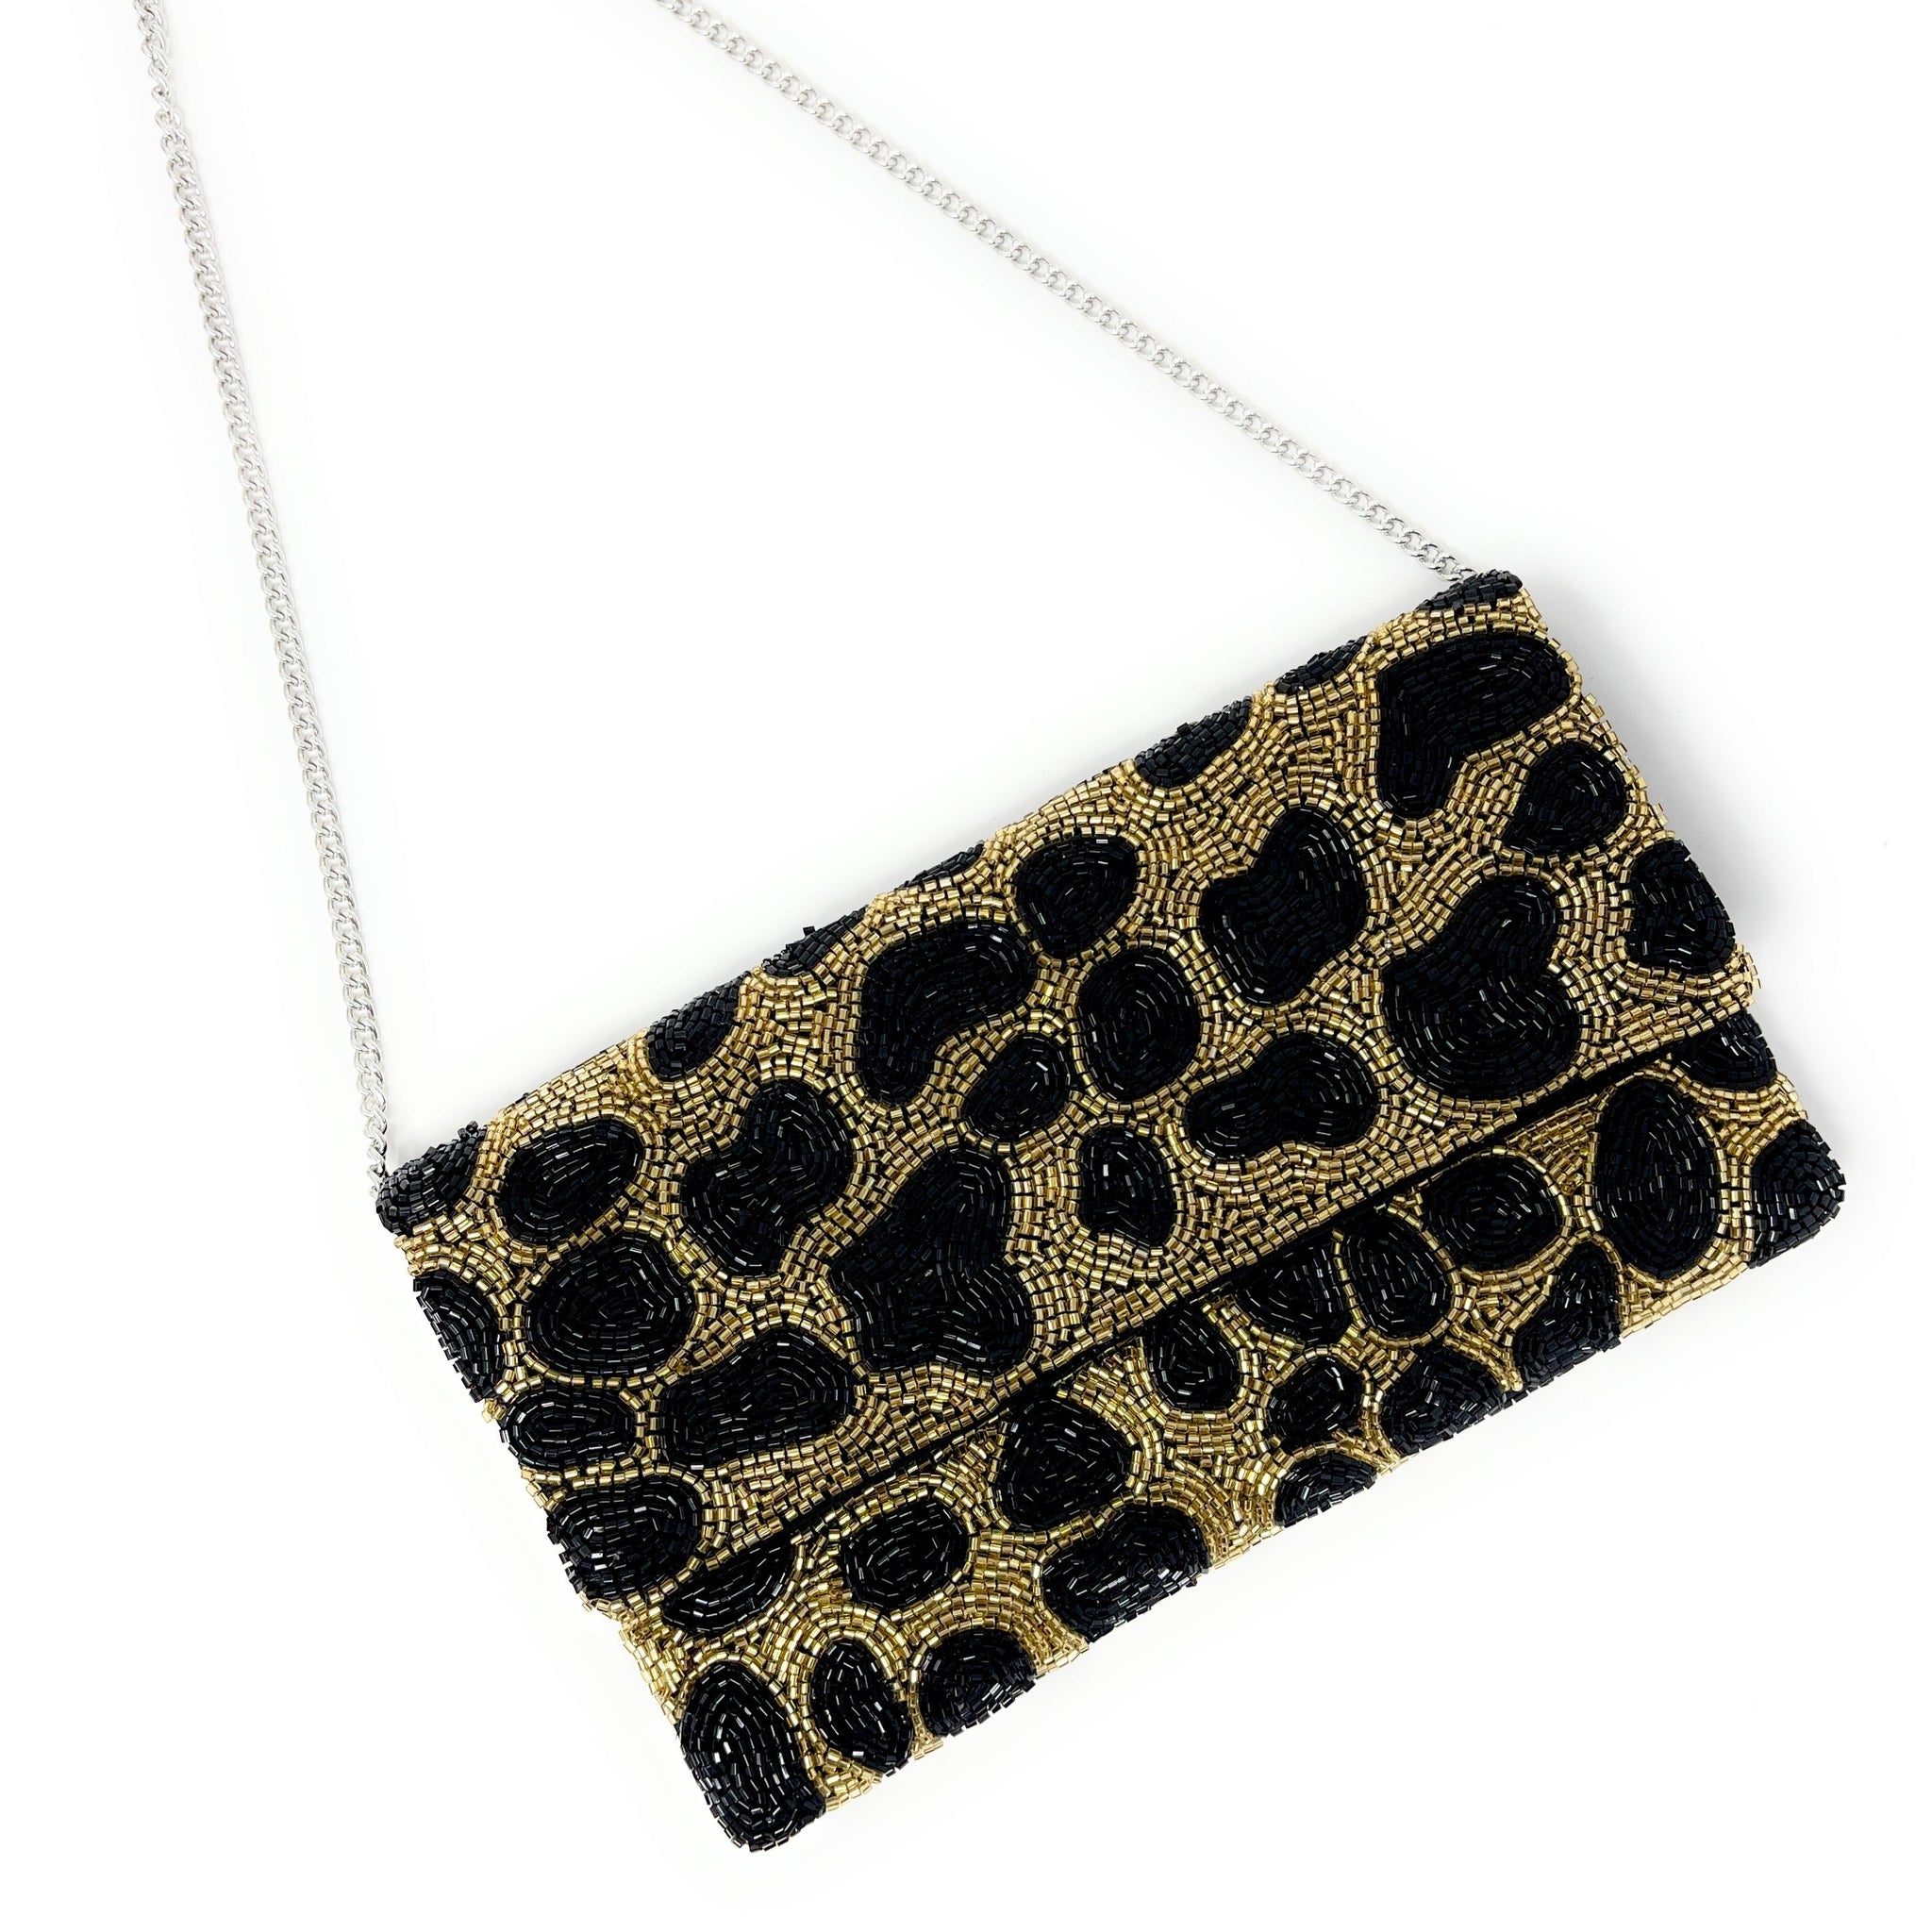 Black White Beaded Clutch, Leopard Crossbody Bag, Evening Party Bag